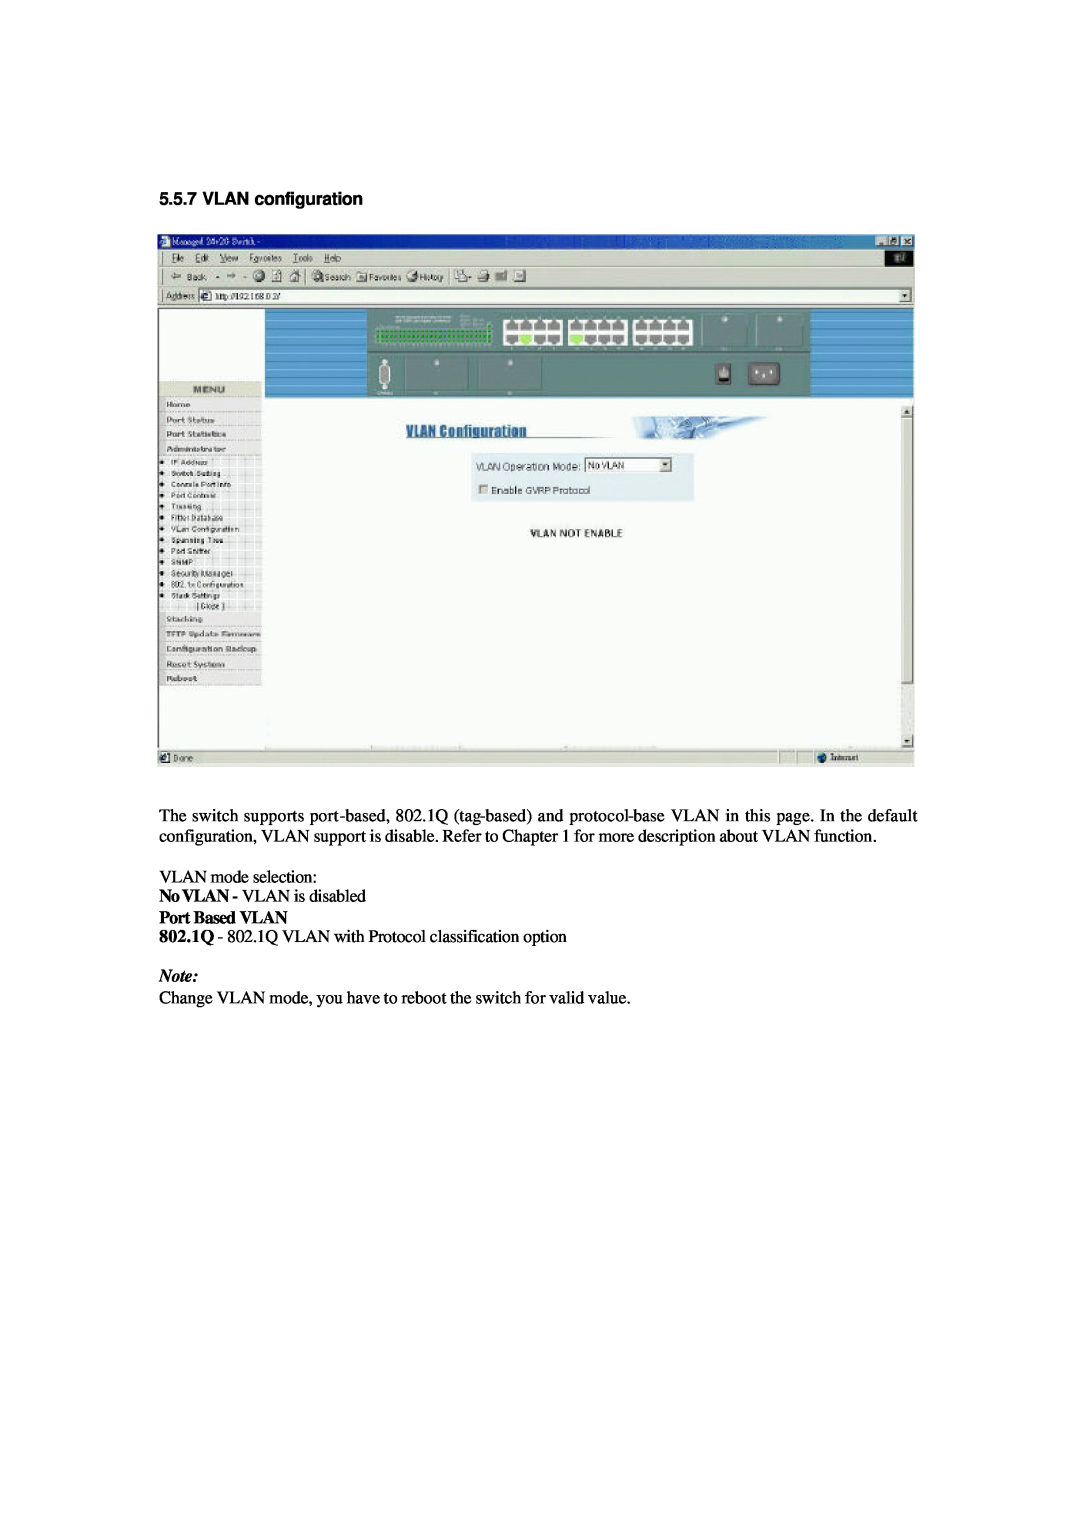 Xerox NS-2260 operation manual VLAN configuration, Port Based VLAN 